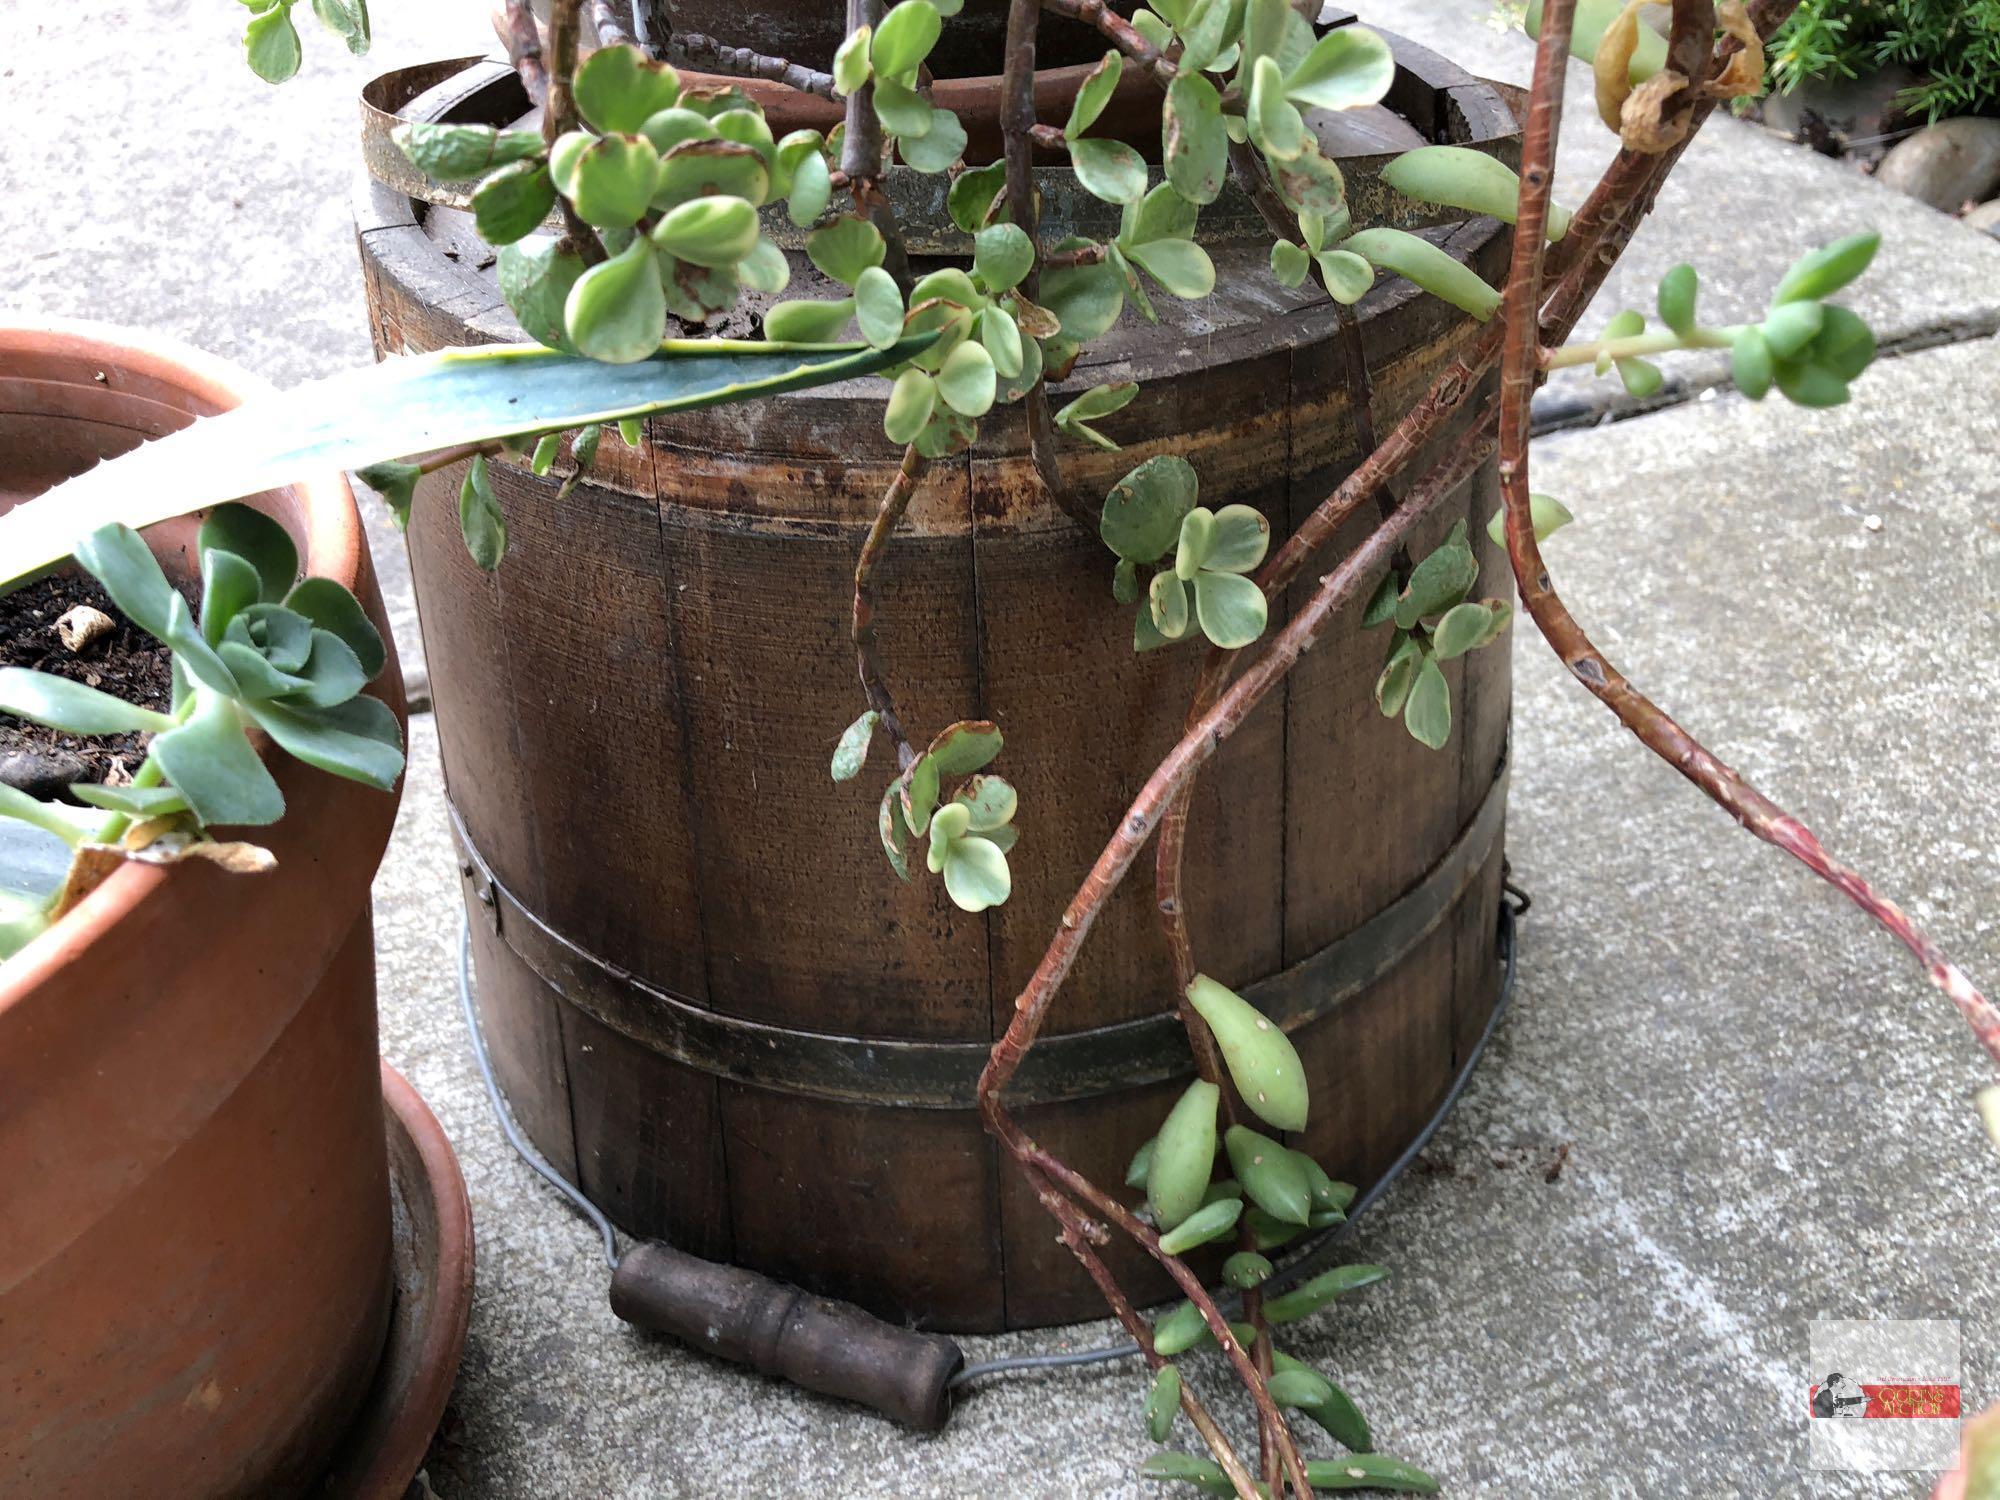 Yard & Garden - 2 terra cotta planter pots with succulents & fern 8" & 9"h + wooden bucket 10"x11"